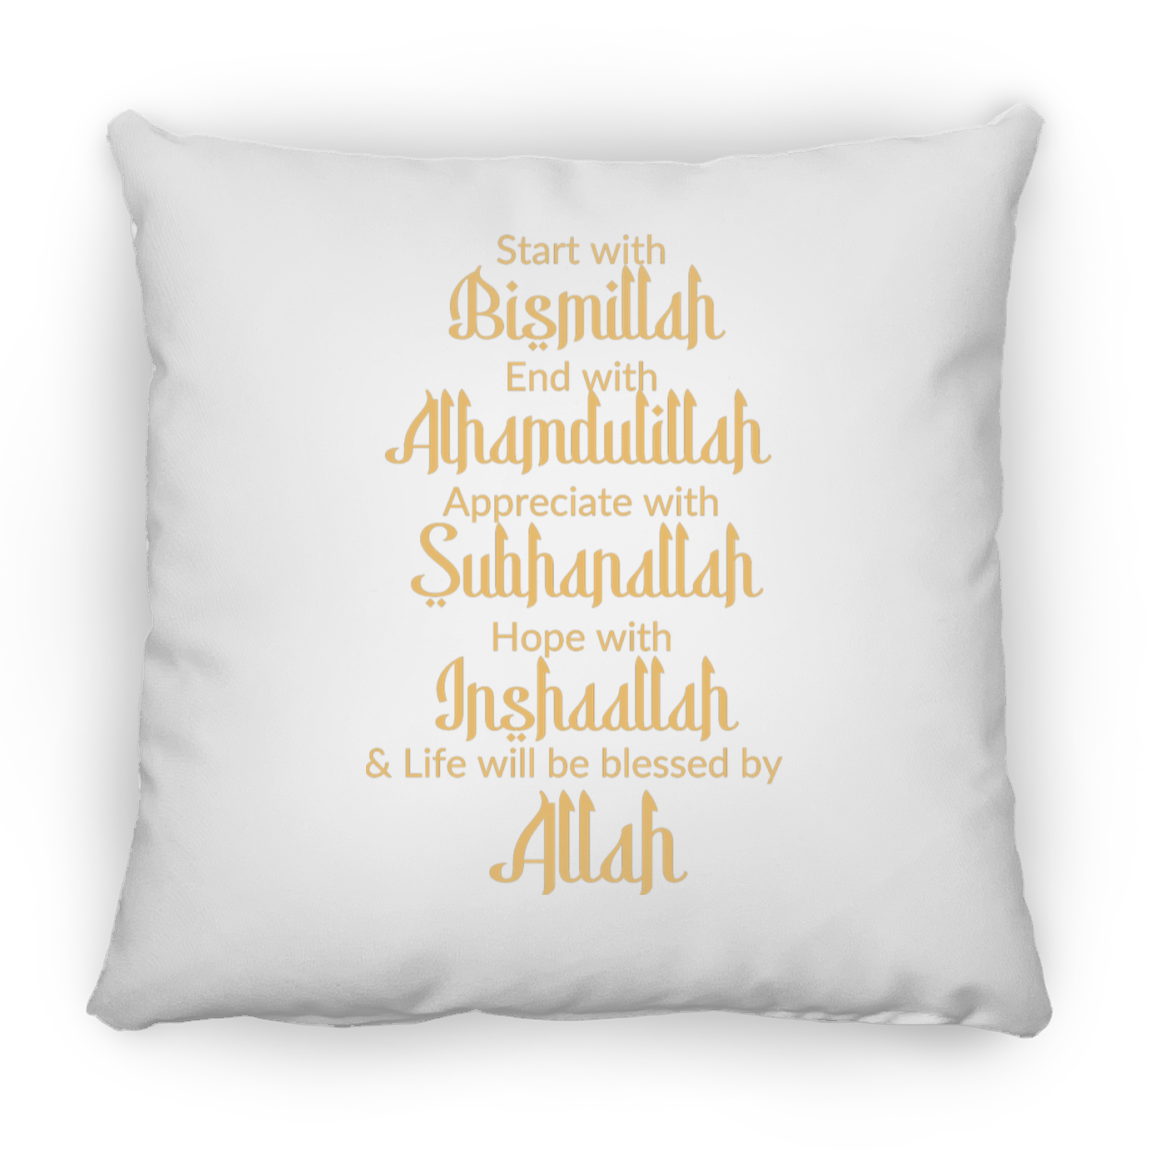 Bismillah Small Square Pillow